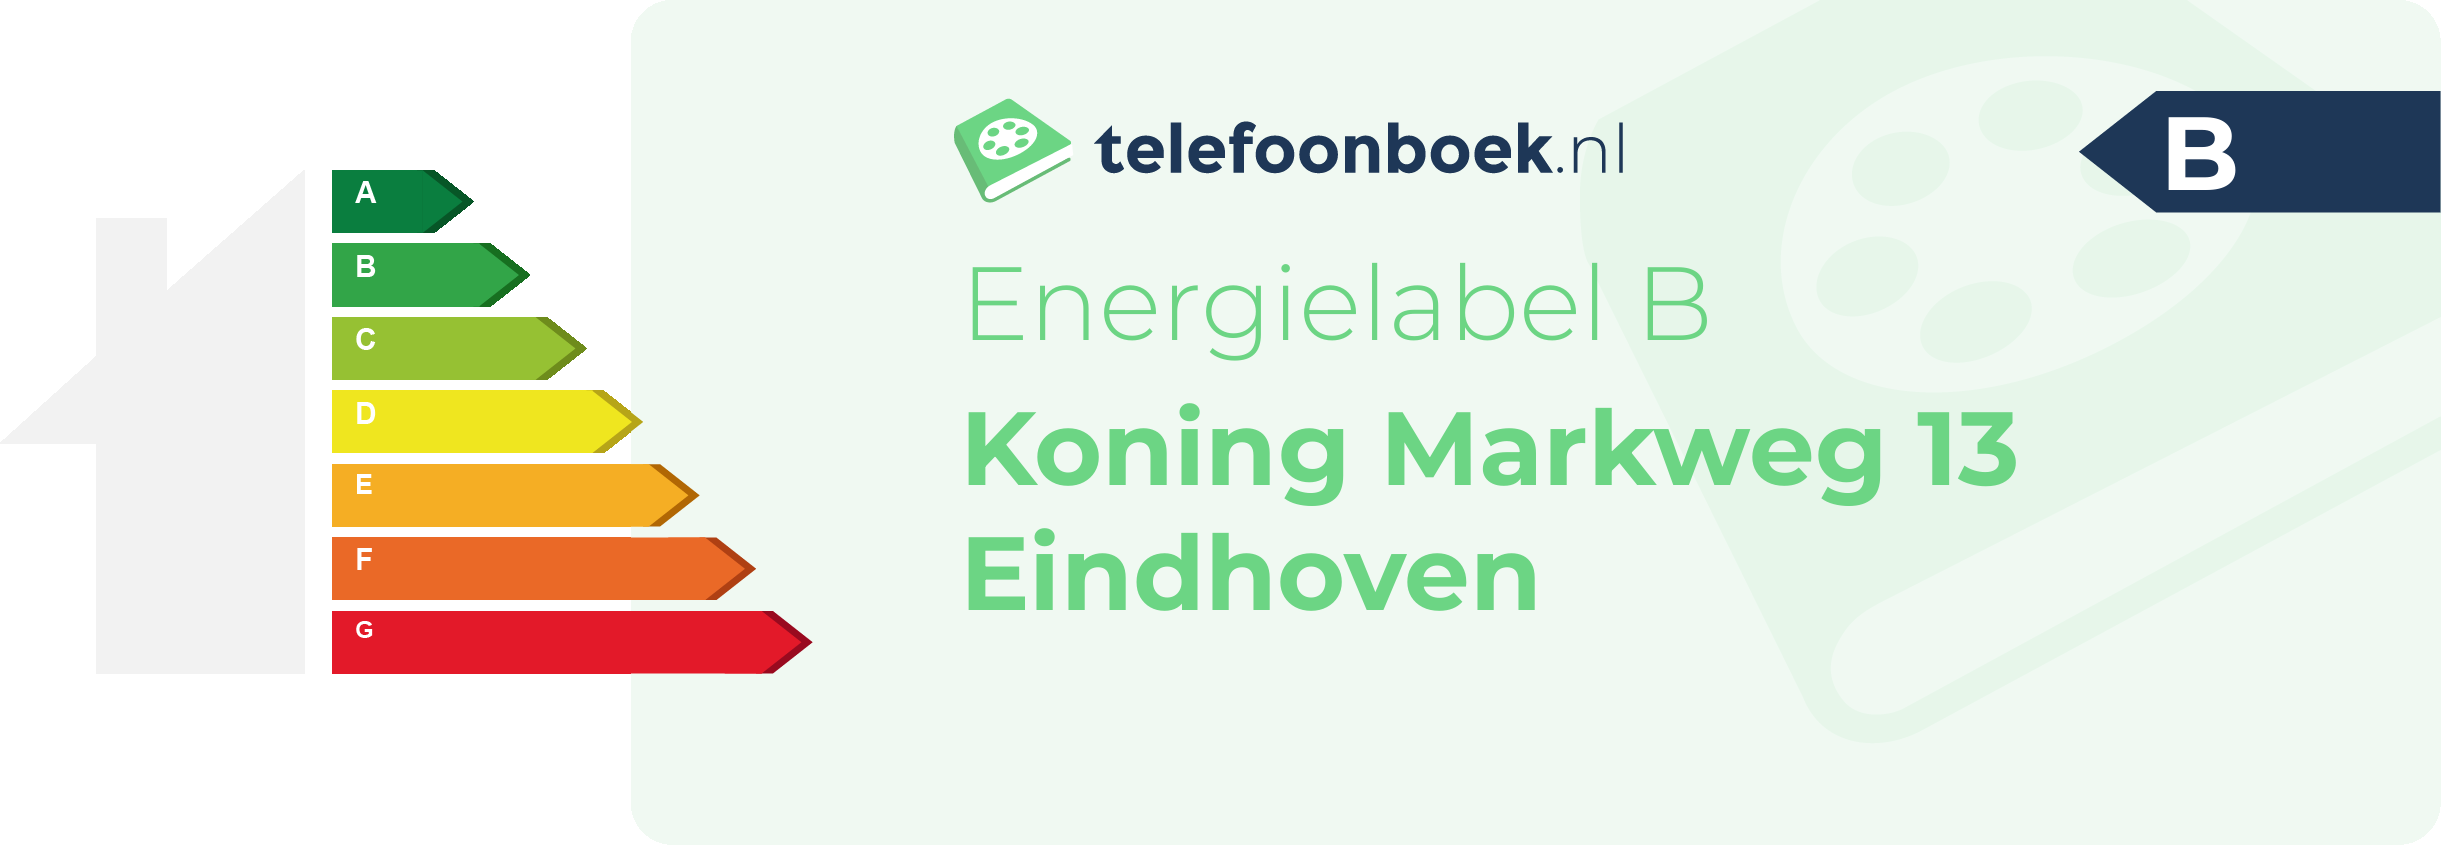 Energielabel Koning Markweg 13 Eindhoven